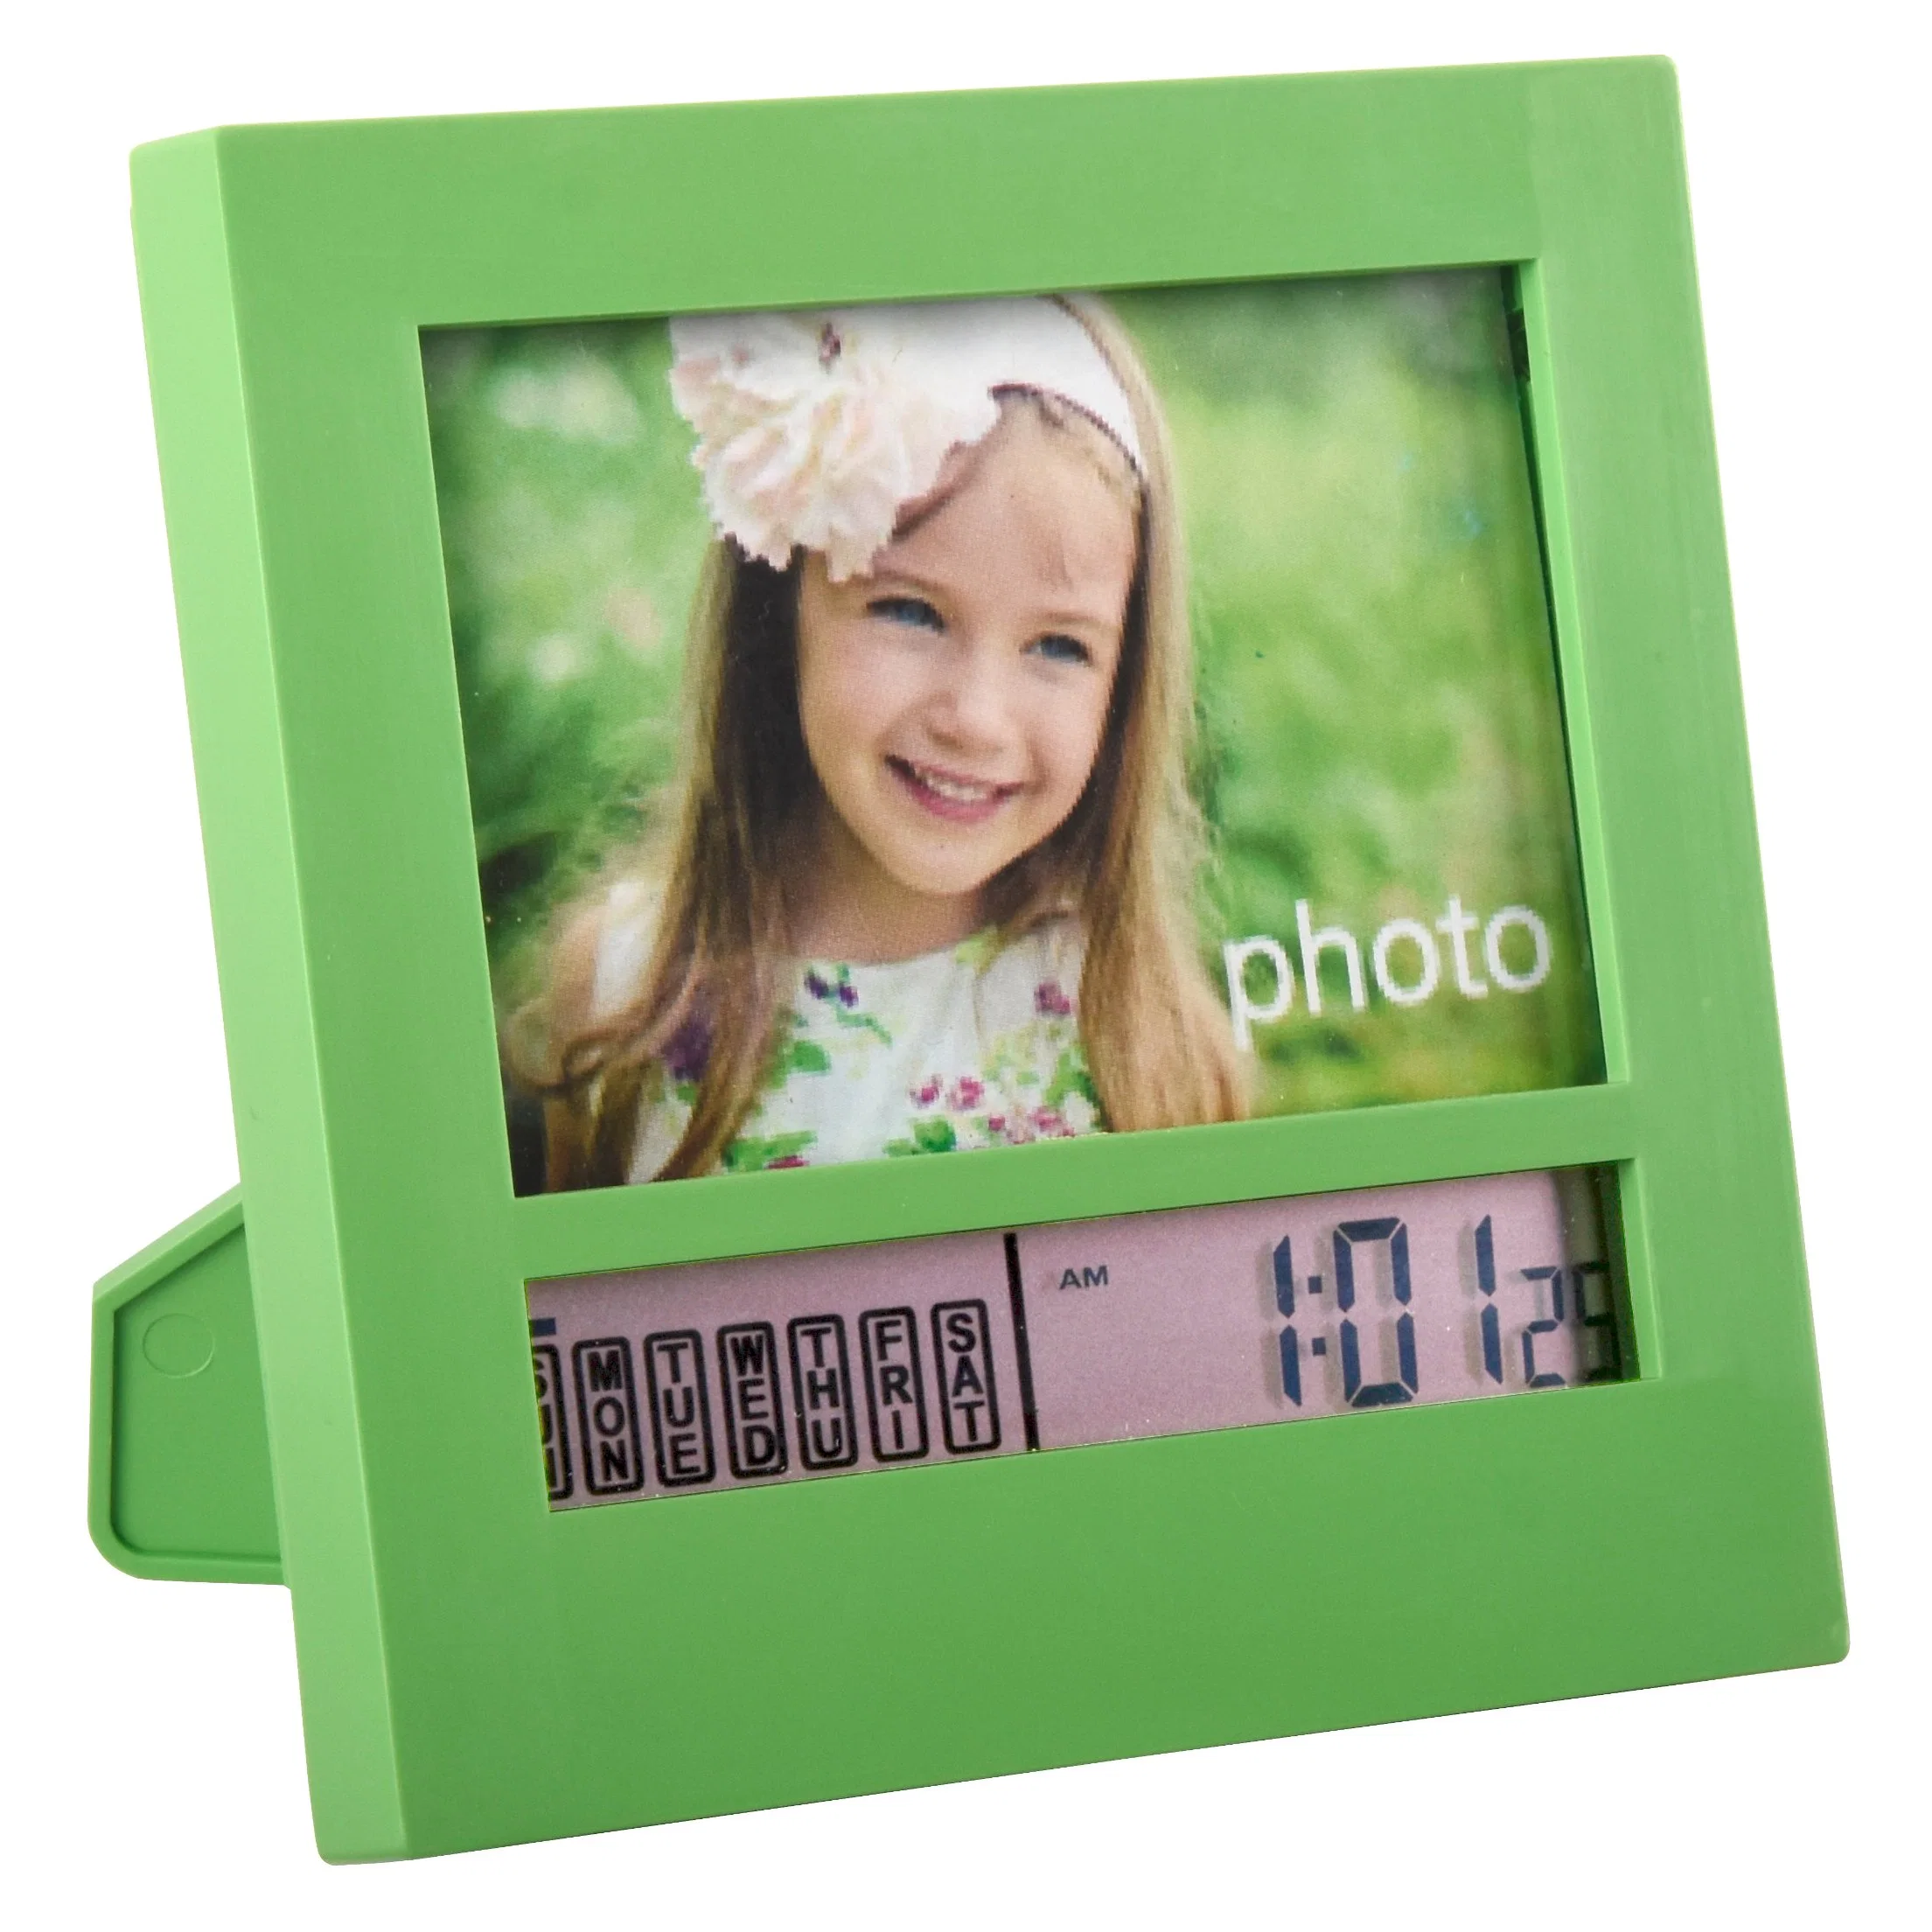 Photo Frame LCD Display Digitaler Tisch Wecker Snooze Funktion Kalender Multi-Color, Batteriebetrieb